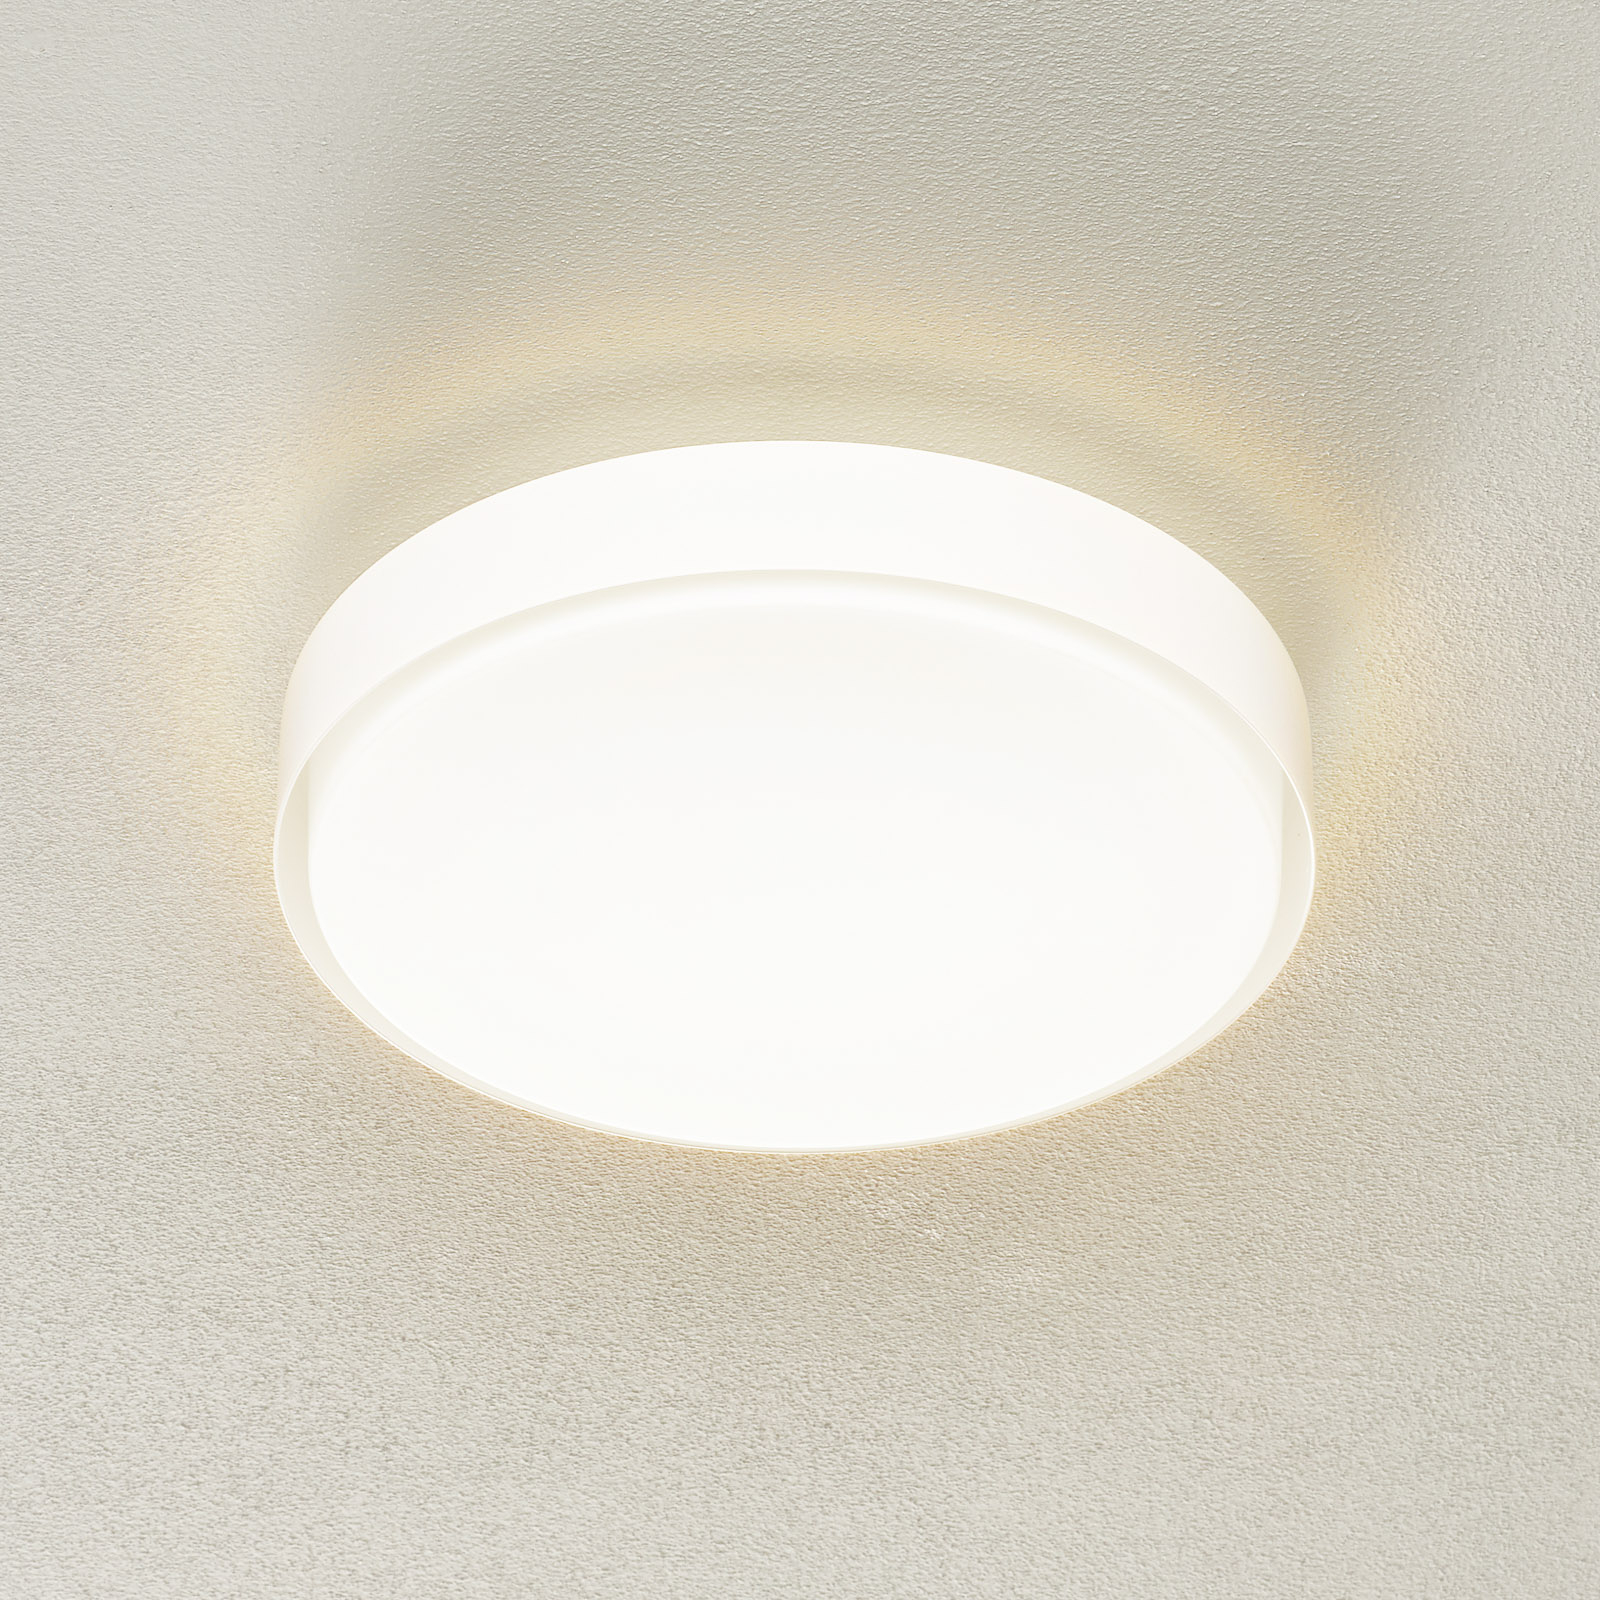 BEGA 34278 plafón LED, blanco, Ø 36 cm, DALI